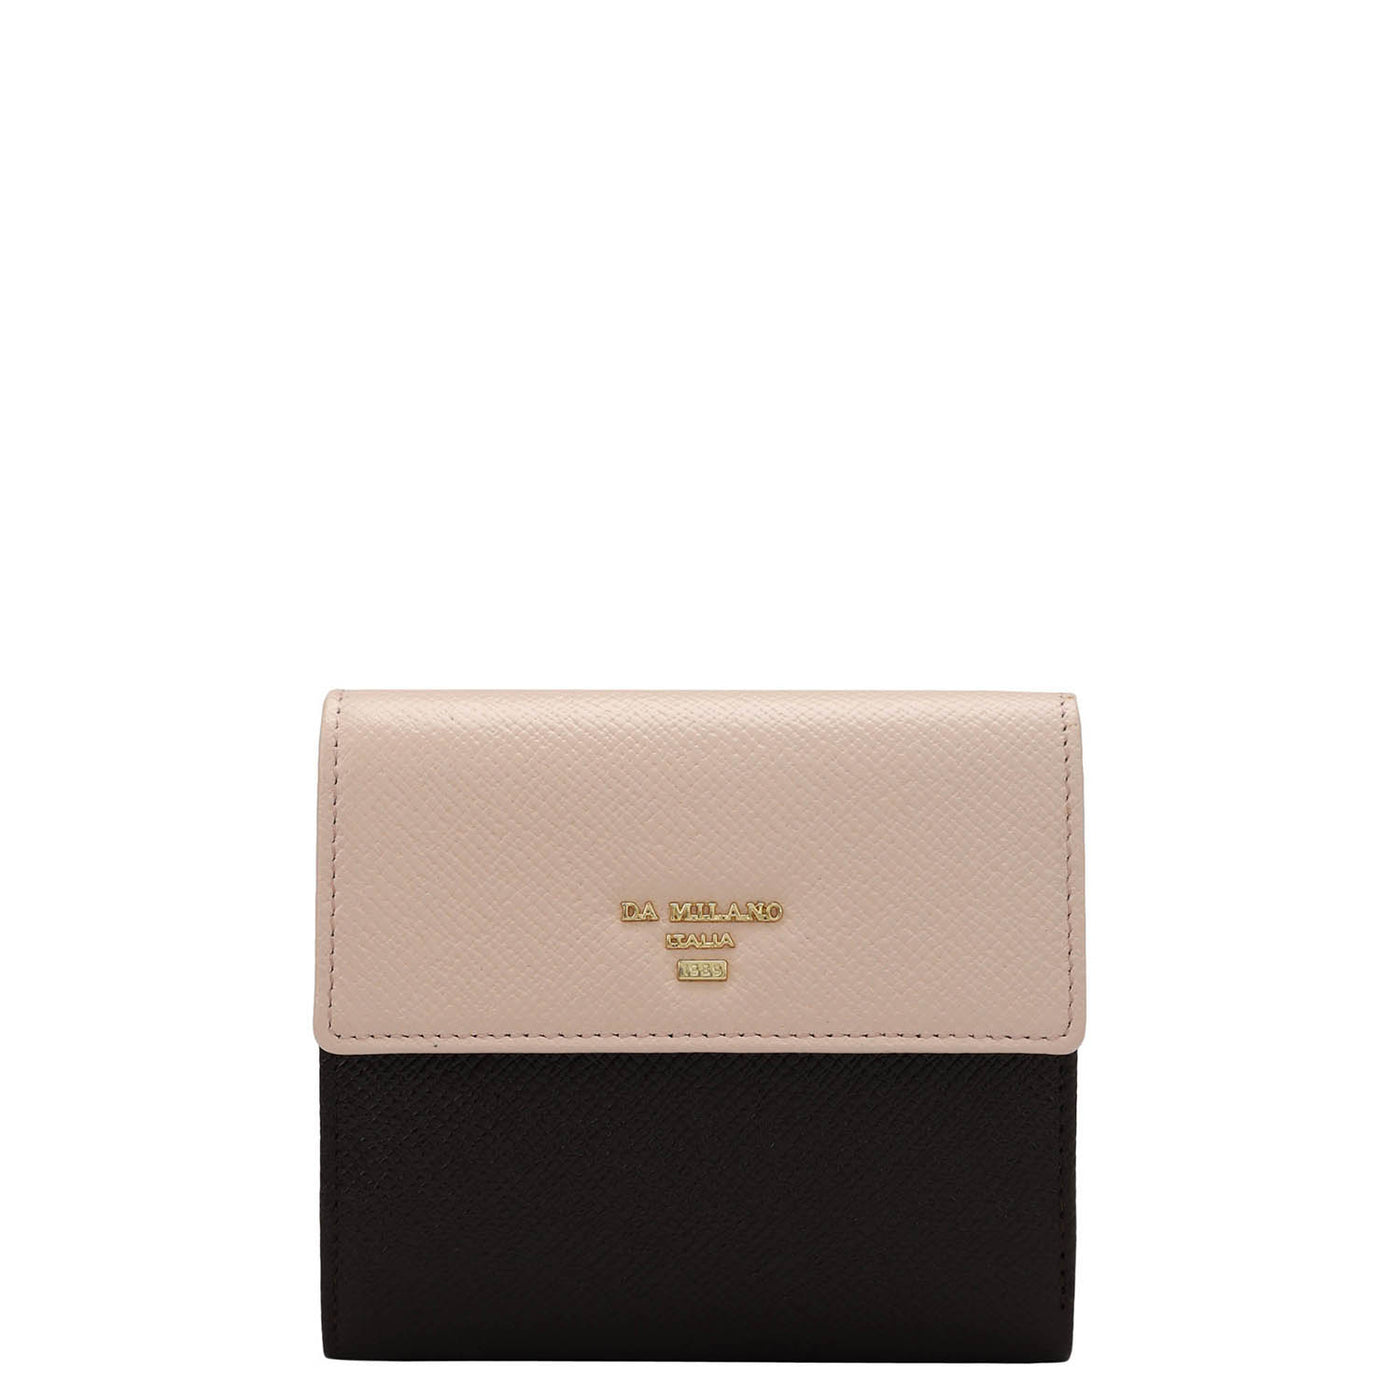 Franzy Leather Ladies Wallet - Chocolate & Blush